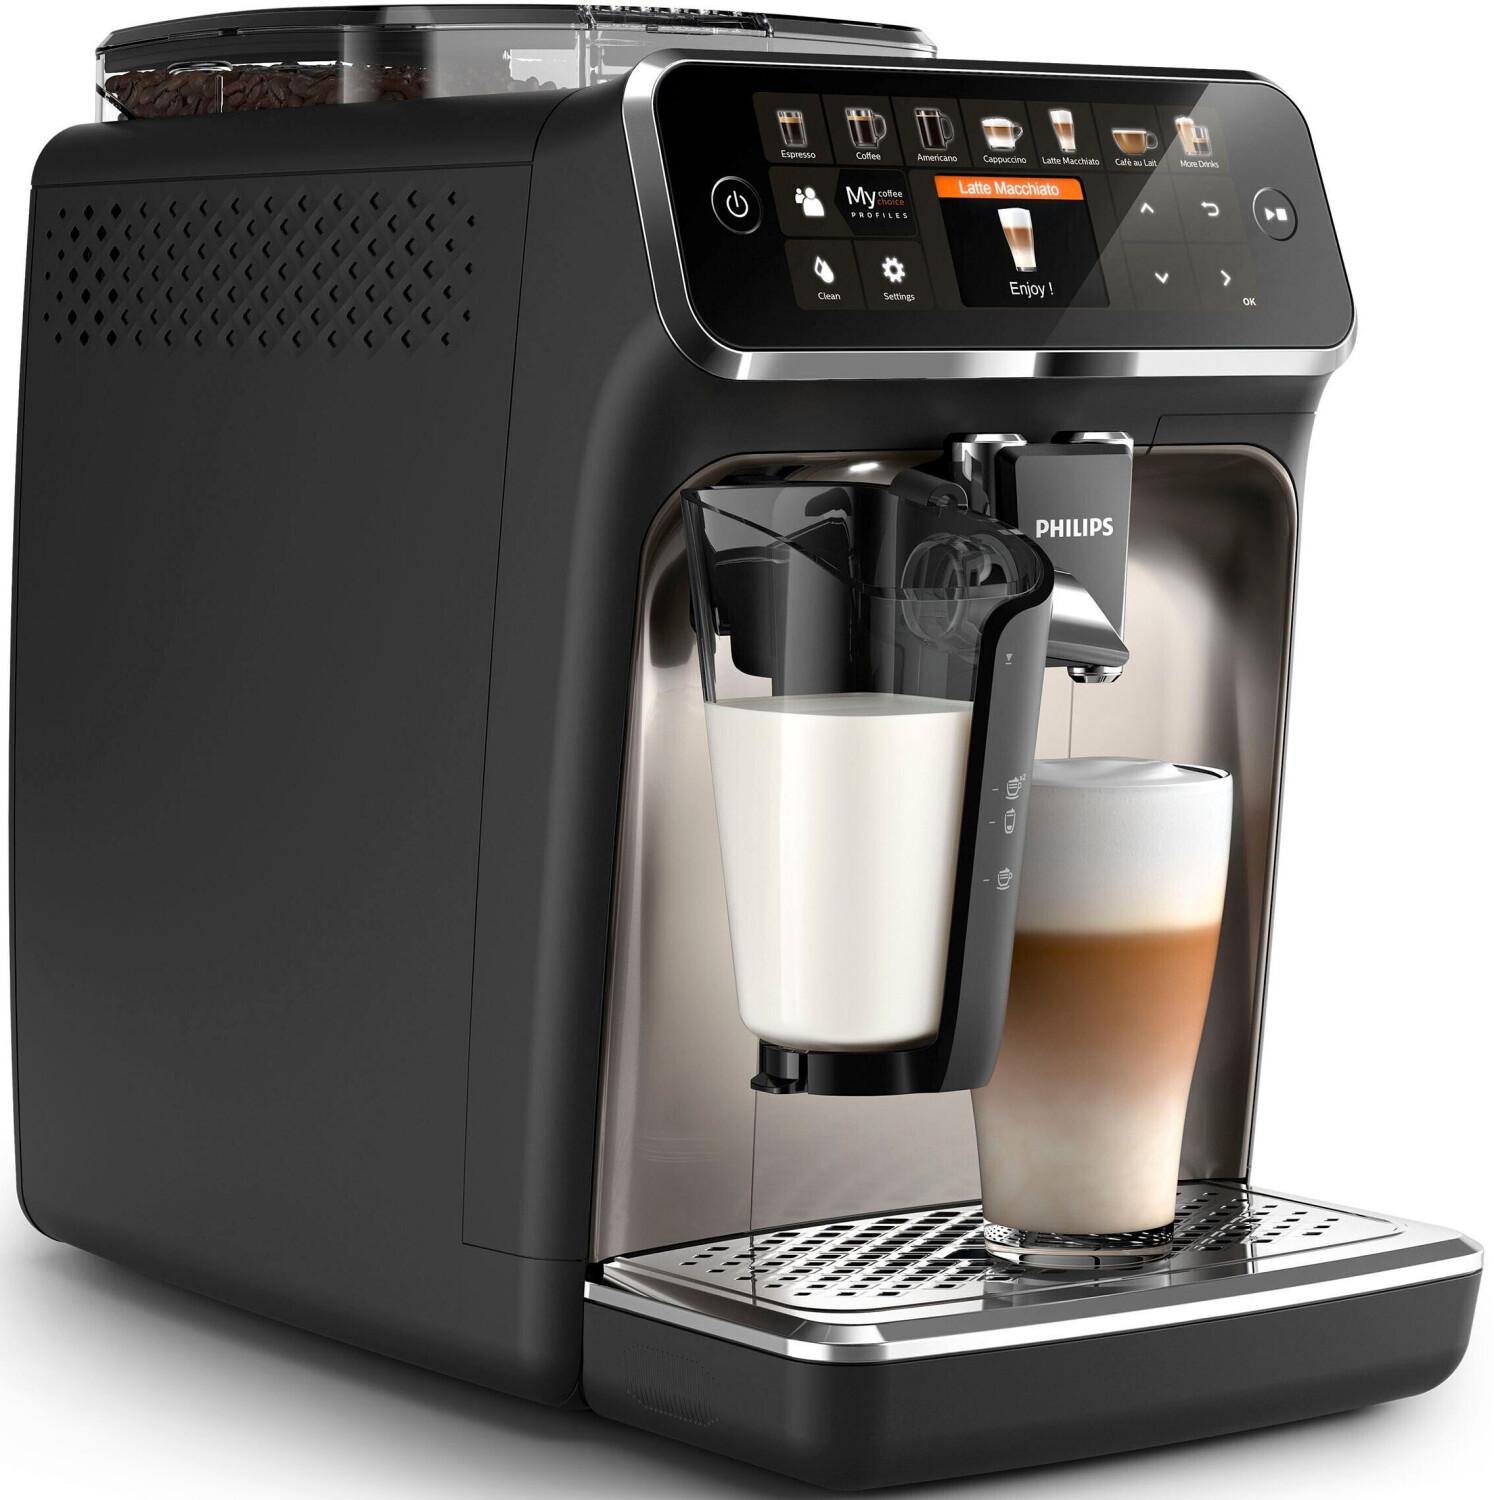 Philips EP5447/90 Kaffeevollautomat – LatteGo Milchsystem, 12 Kaffeespezialitäten, Intuitives Display, 4 Benutzerprofile, Chrom